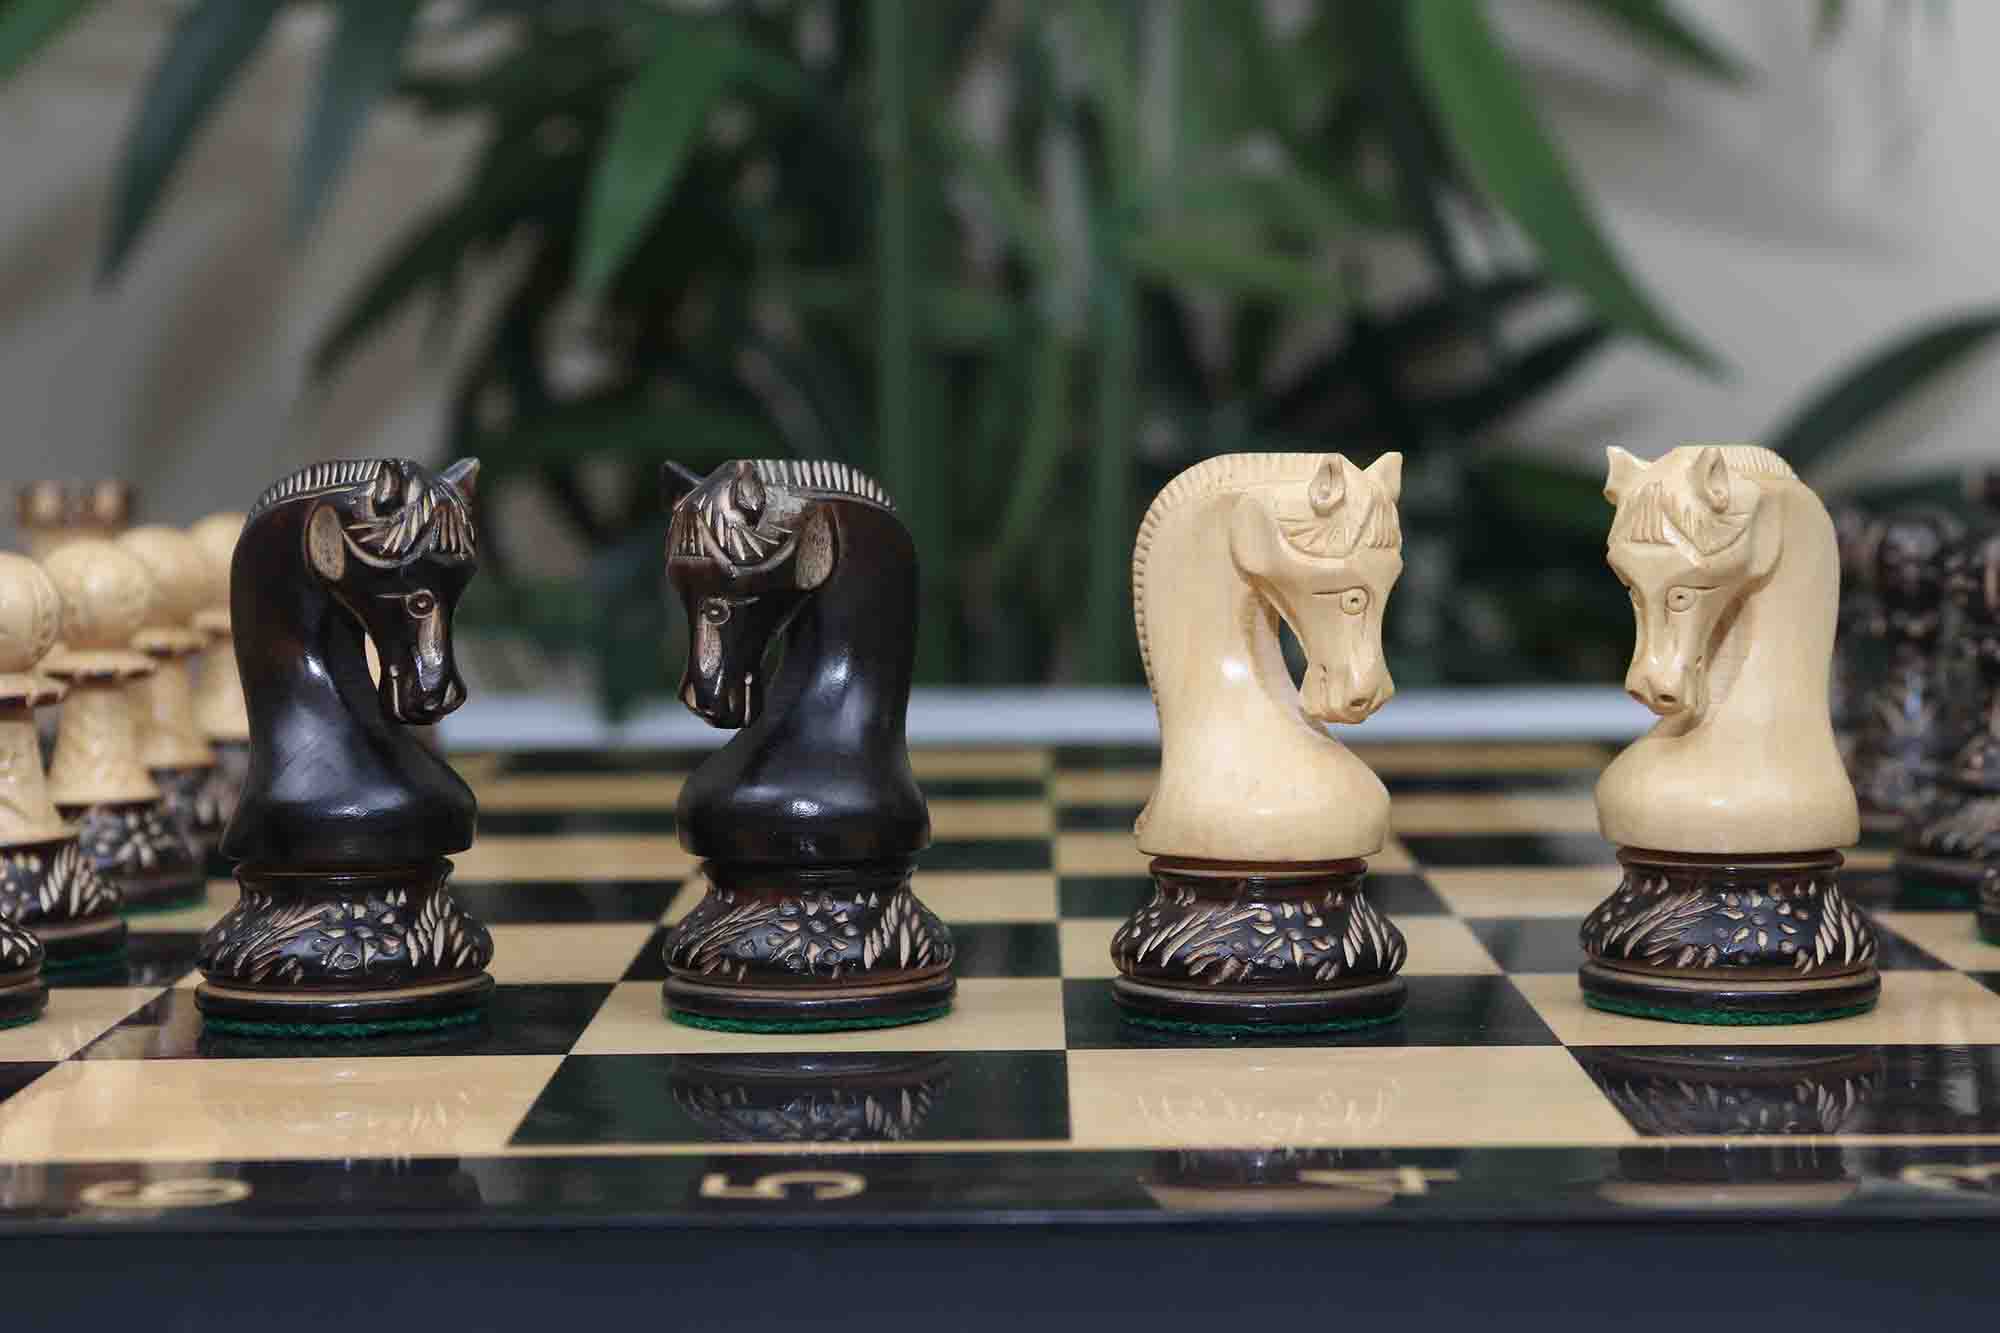 Leningrad Series 4" Luxury Staunton Chess Set in Burnt Boxwood